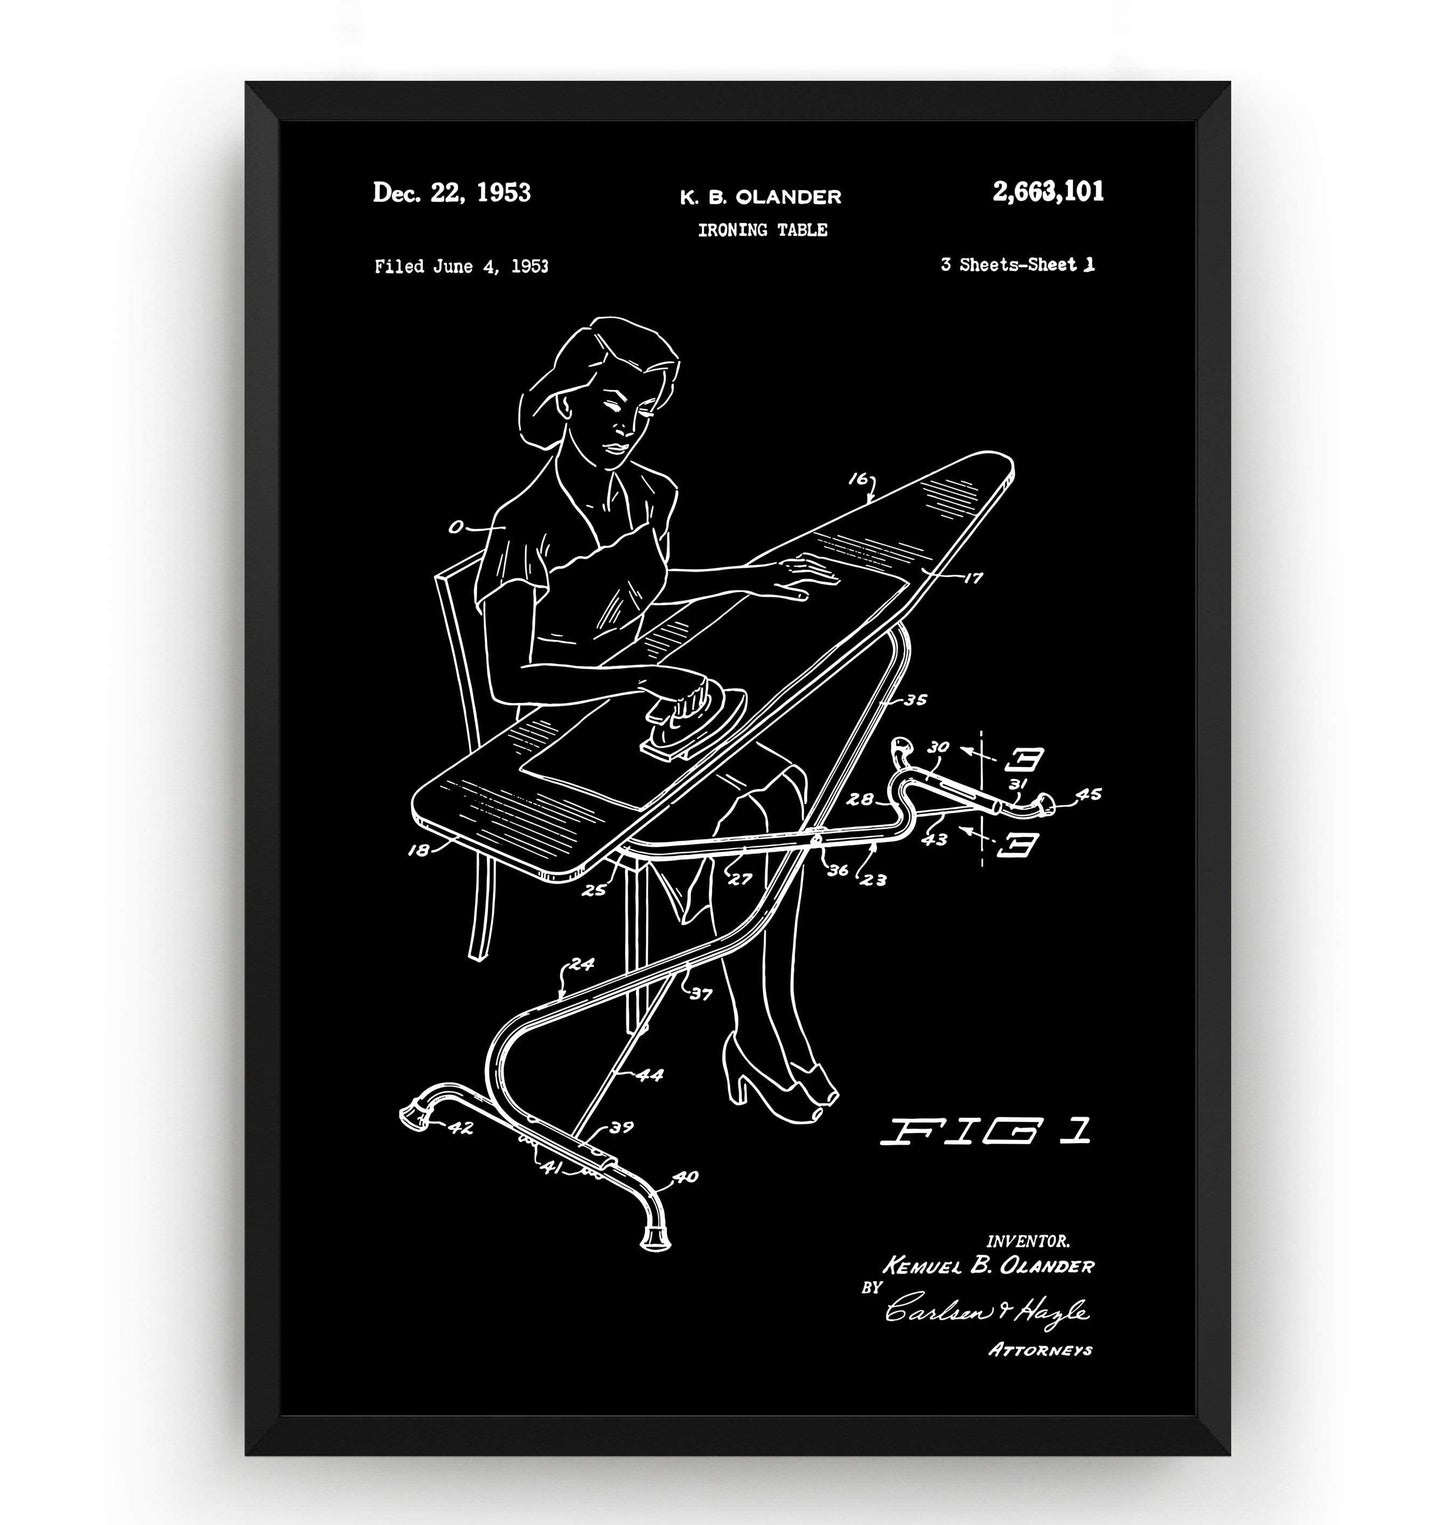 Ironing Board 1953 Patent Print - Magic Posters